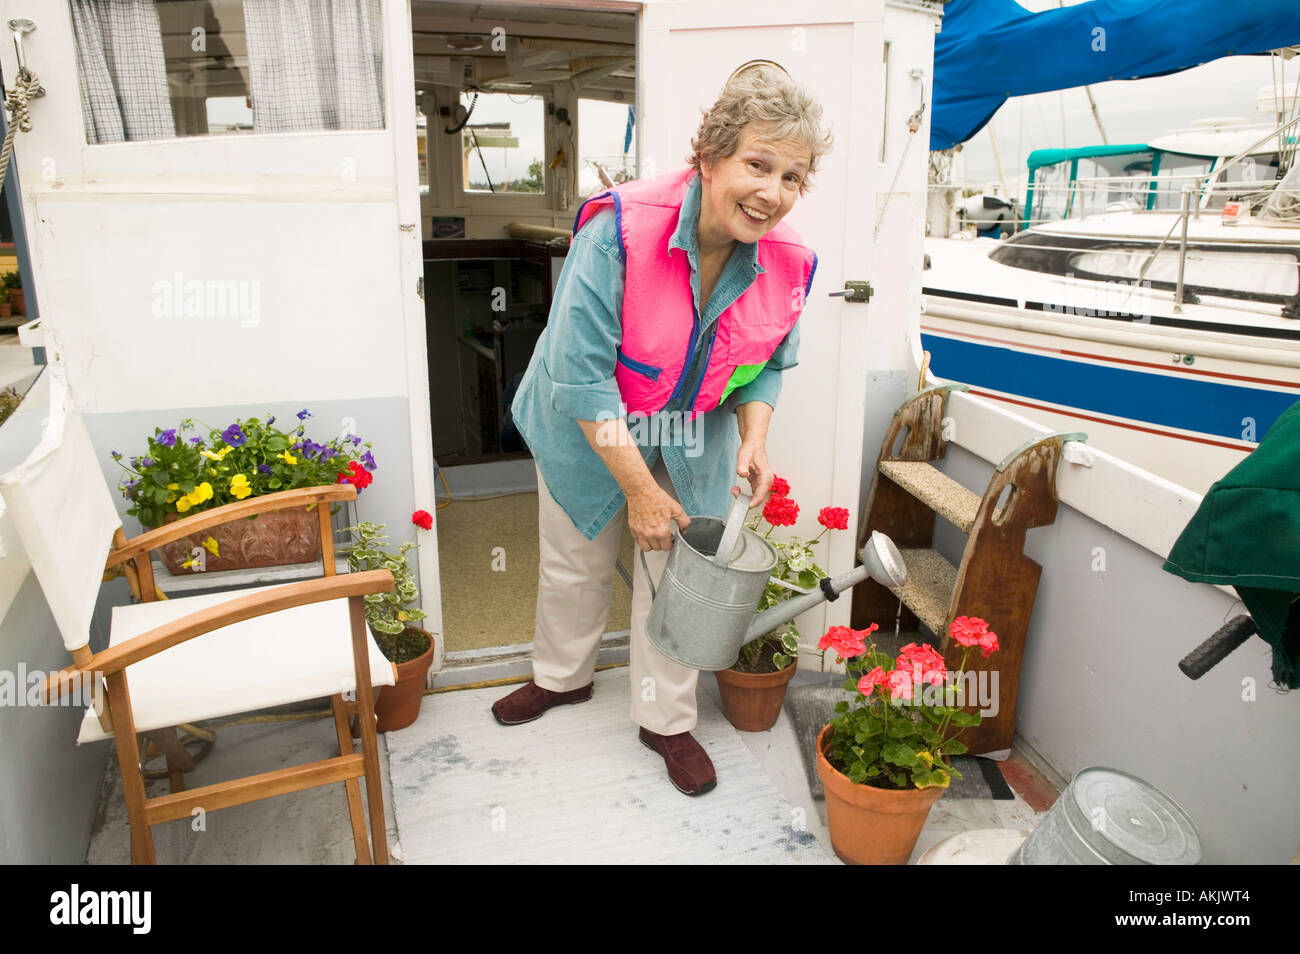 Woman on houseboat watering plants Stock Photo